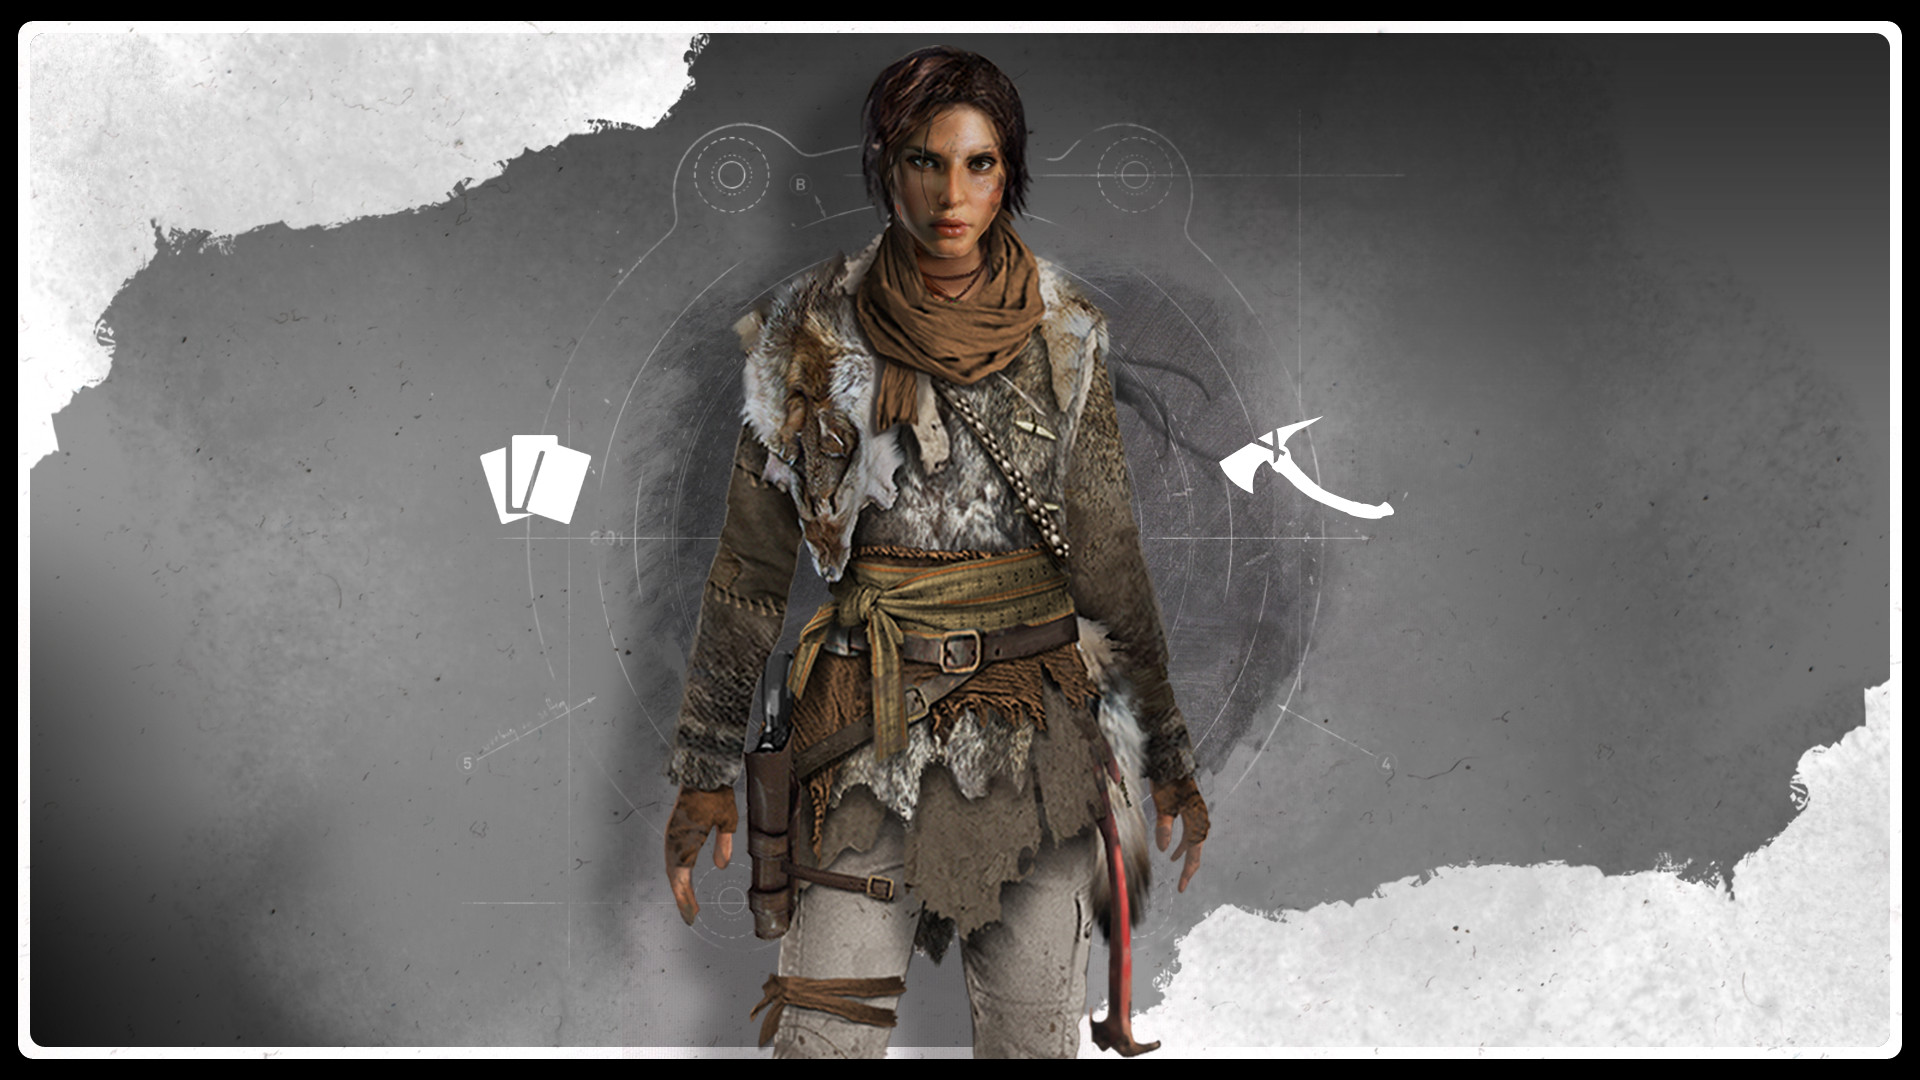 Rise Of The Tomb Raider - Wilderness Survivor Pack DLC Steam CD Key